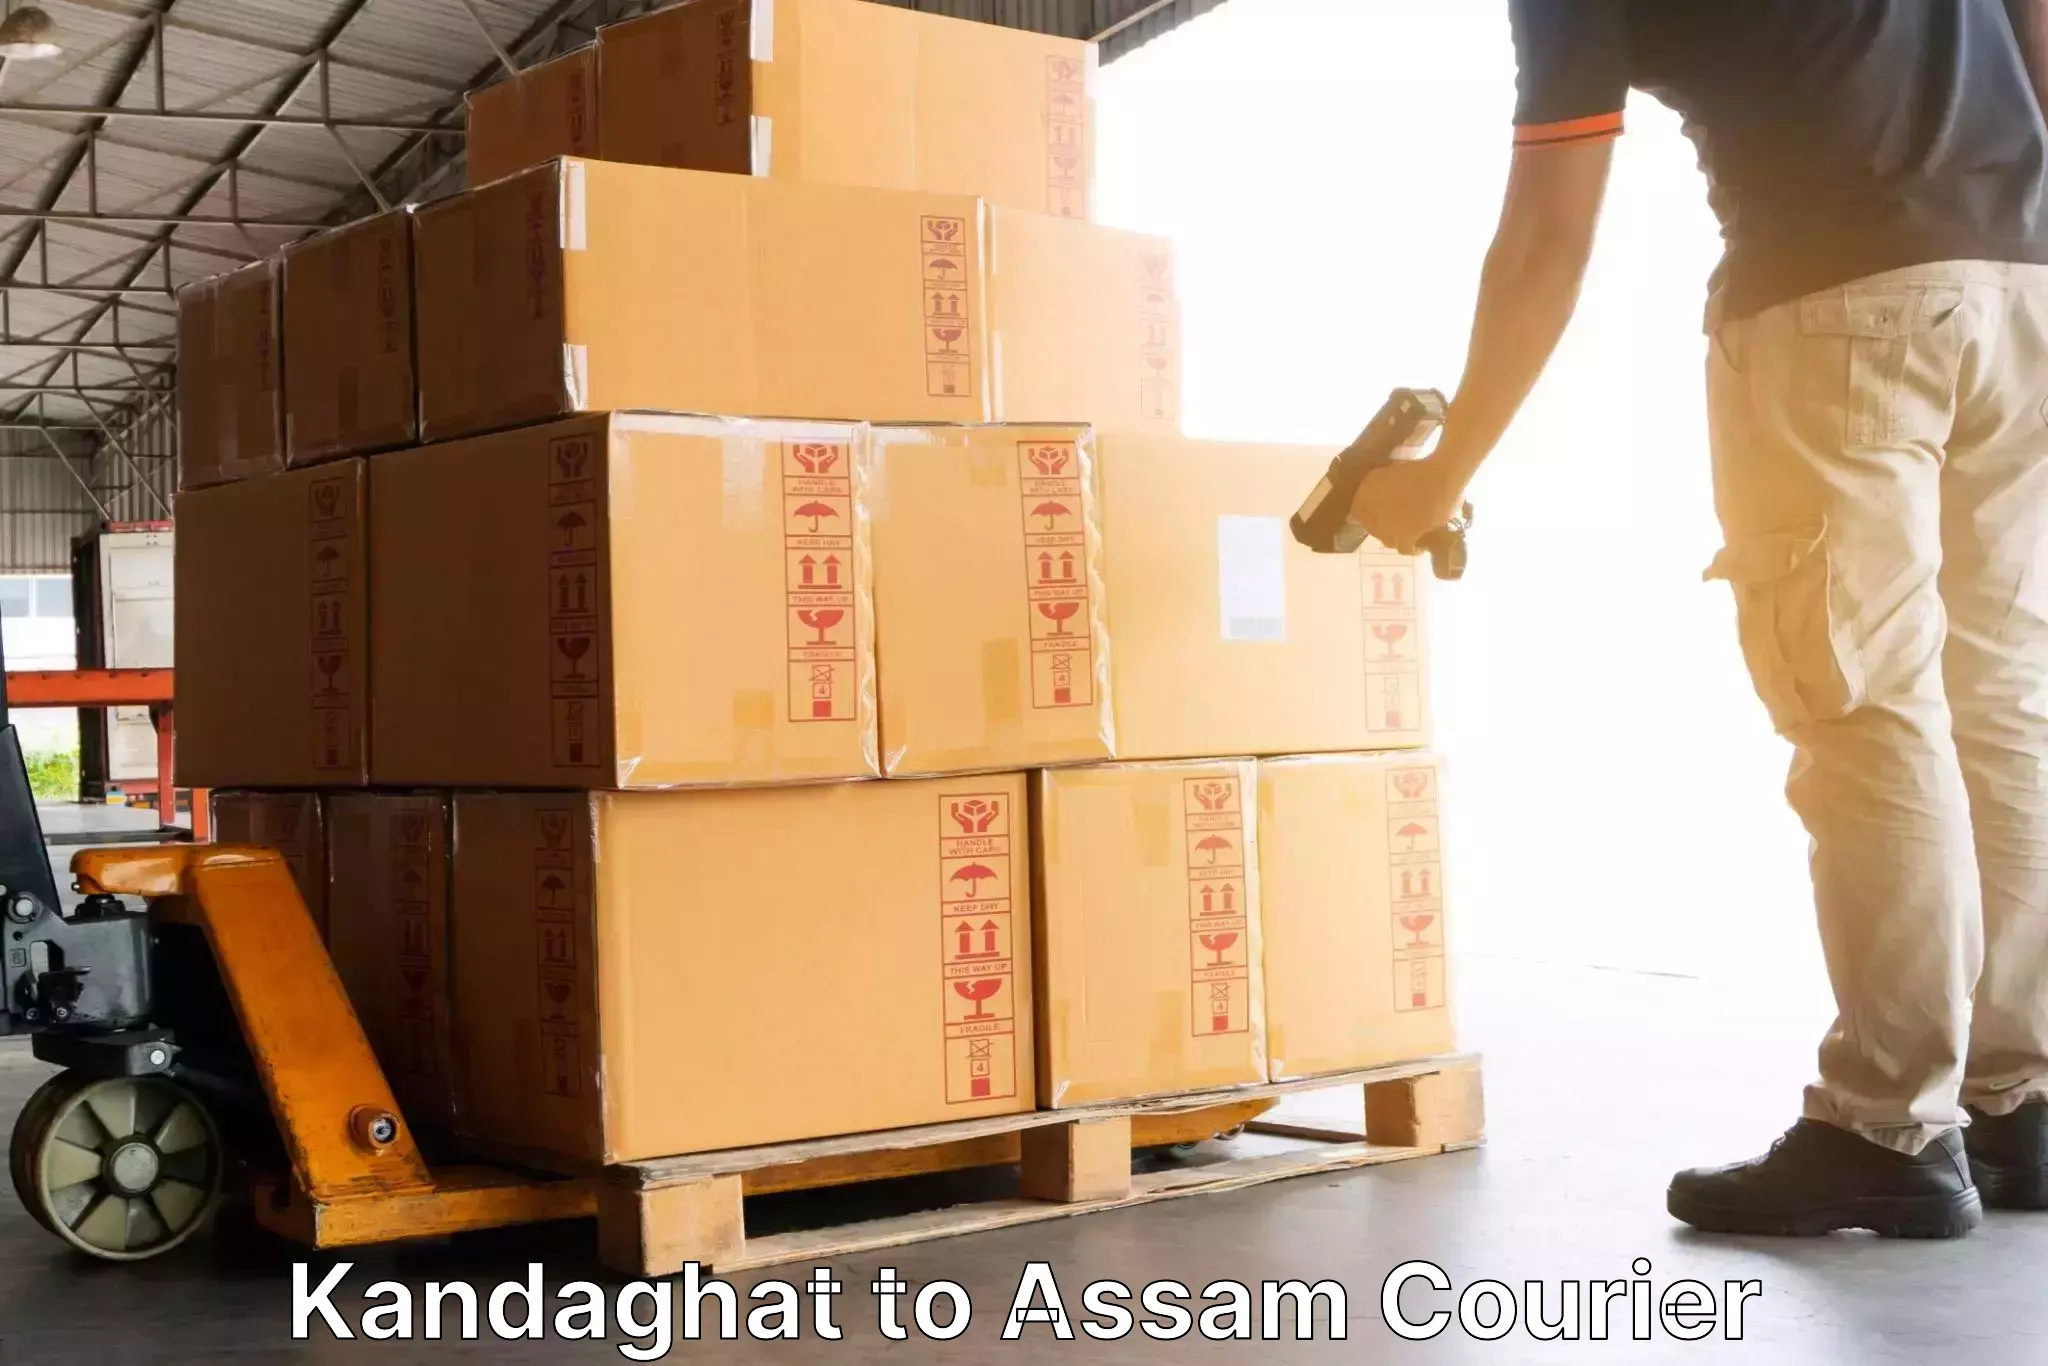 Reliable package handling Kandaghat to Jonai